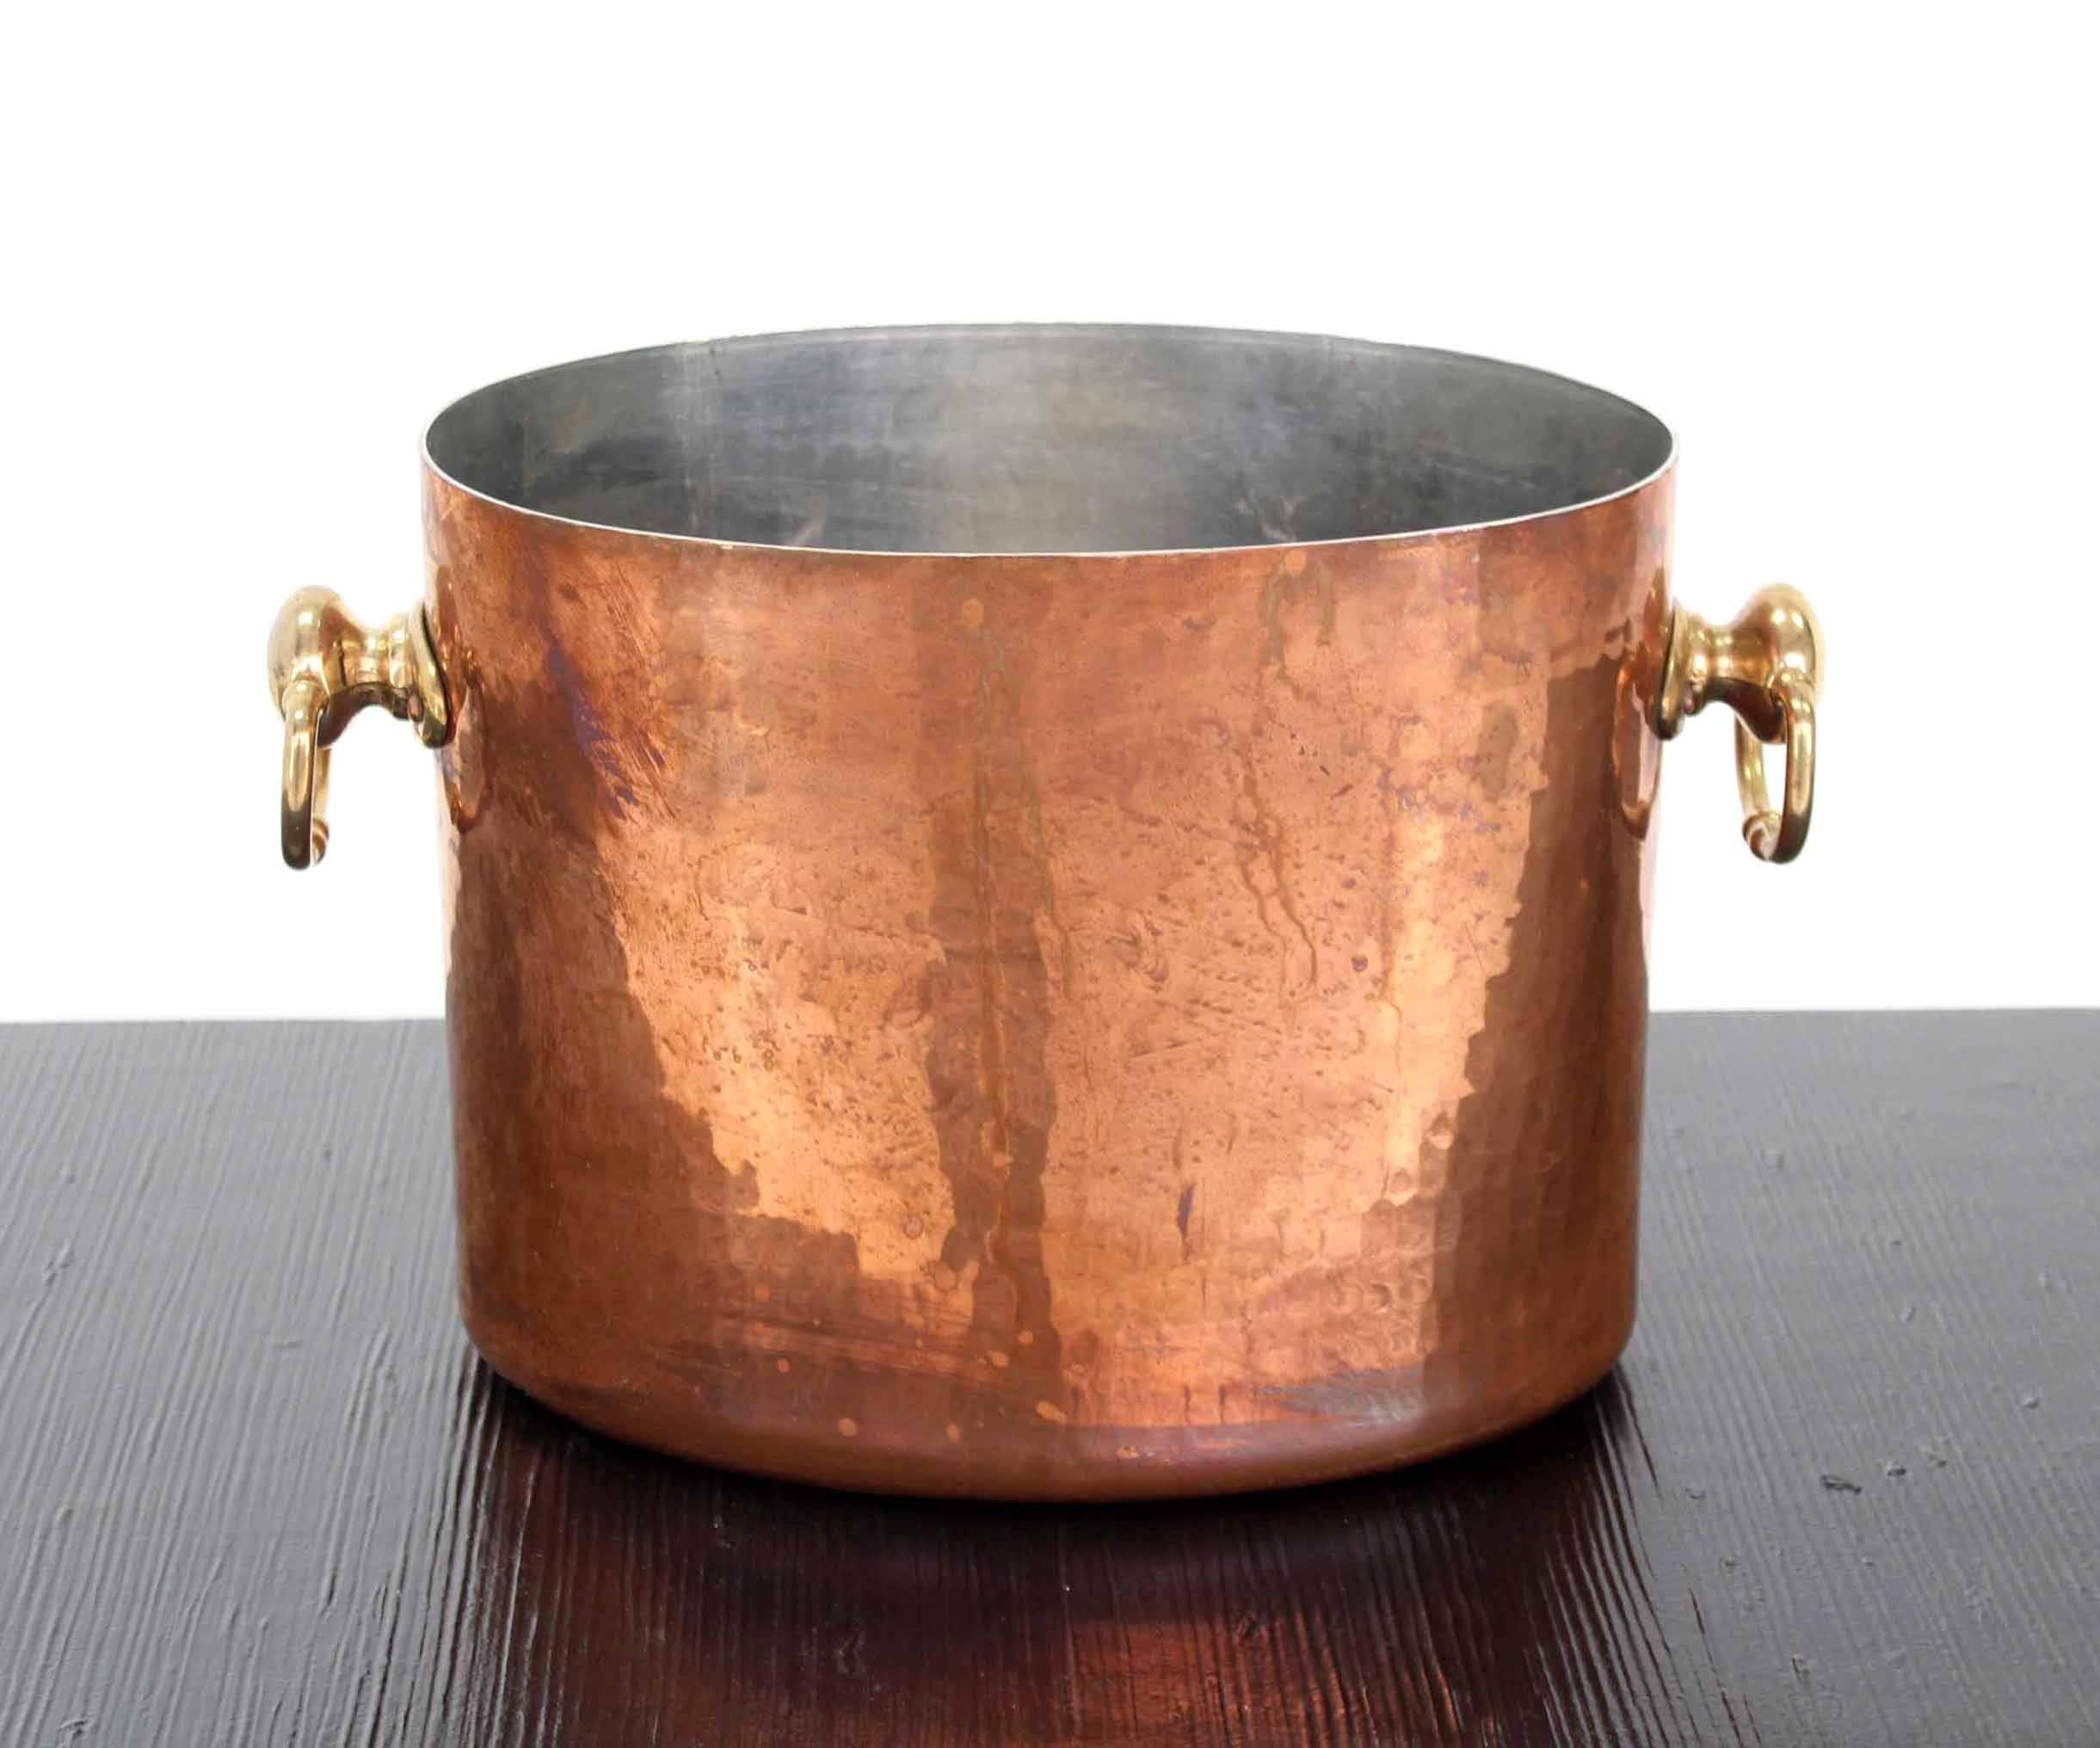 Very nice Mid-Century Modern hammered copper ice bucket.